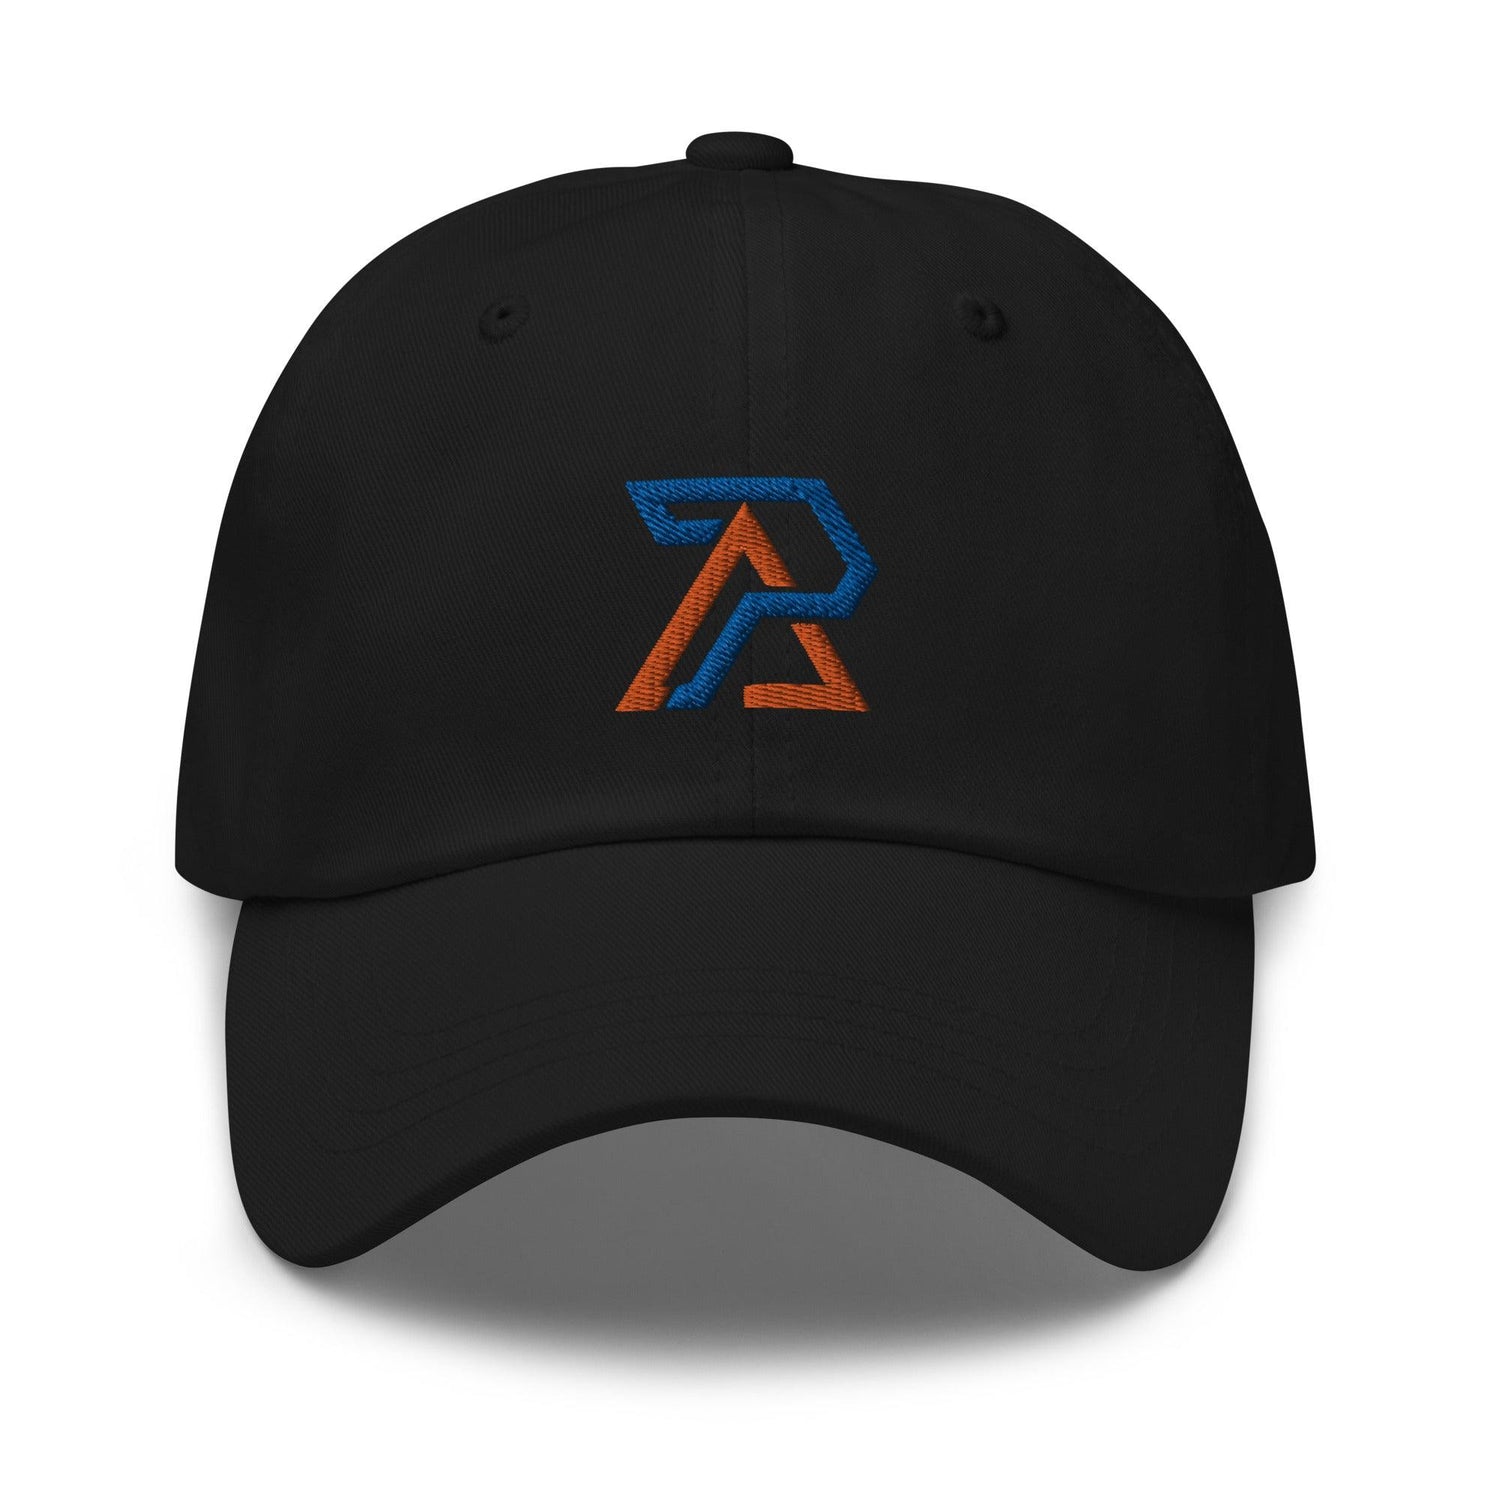 Philip Abner “Signature” hat - Fan Arch